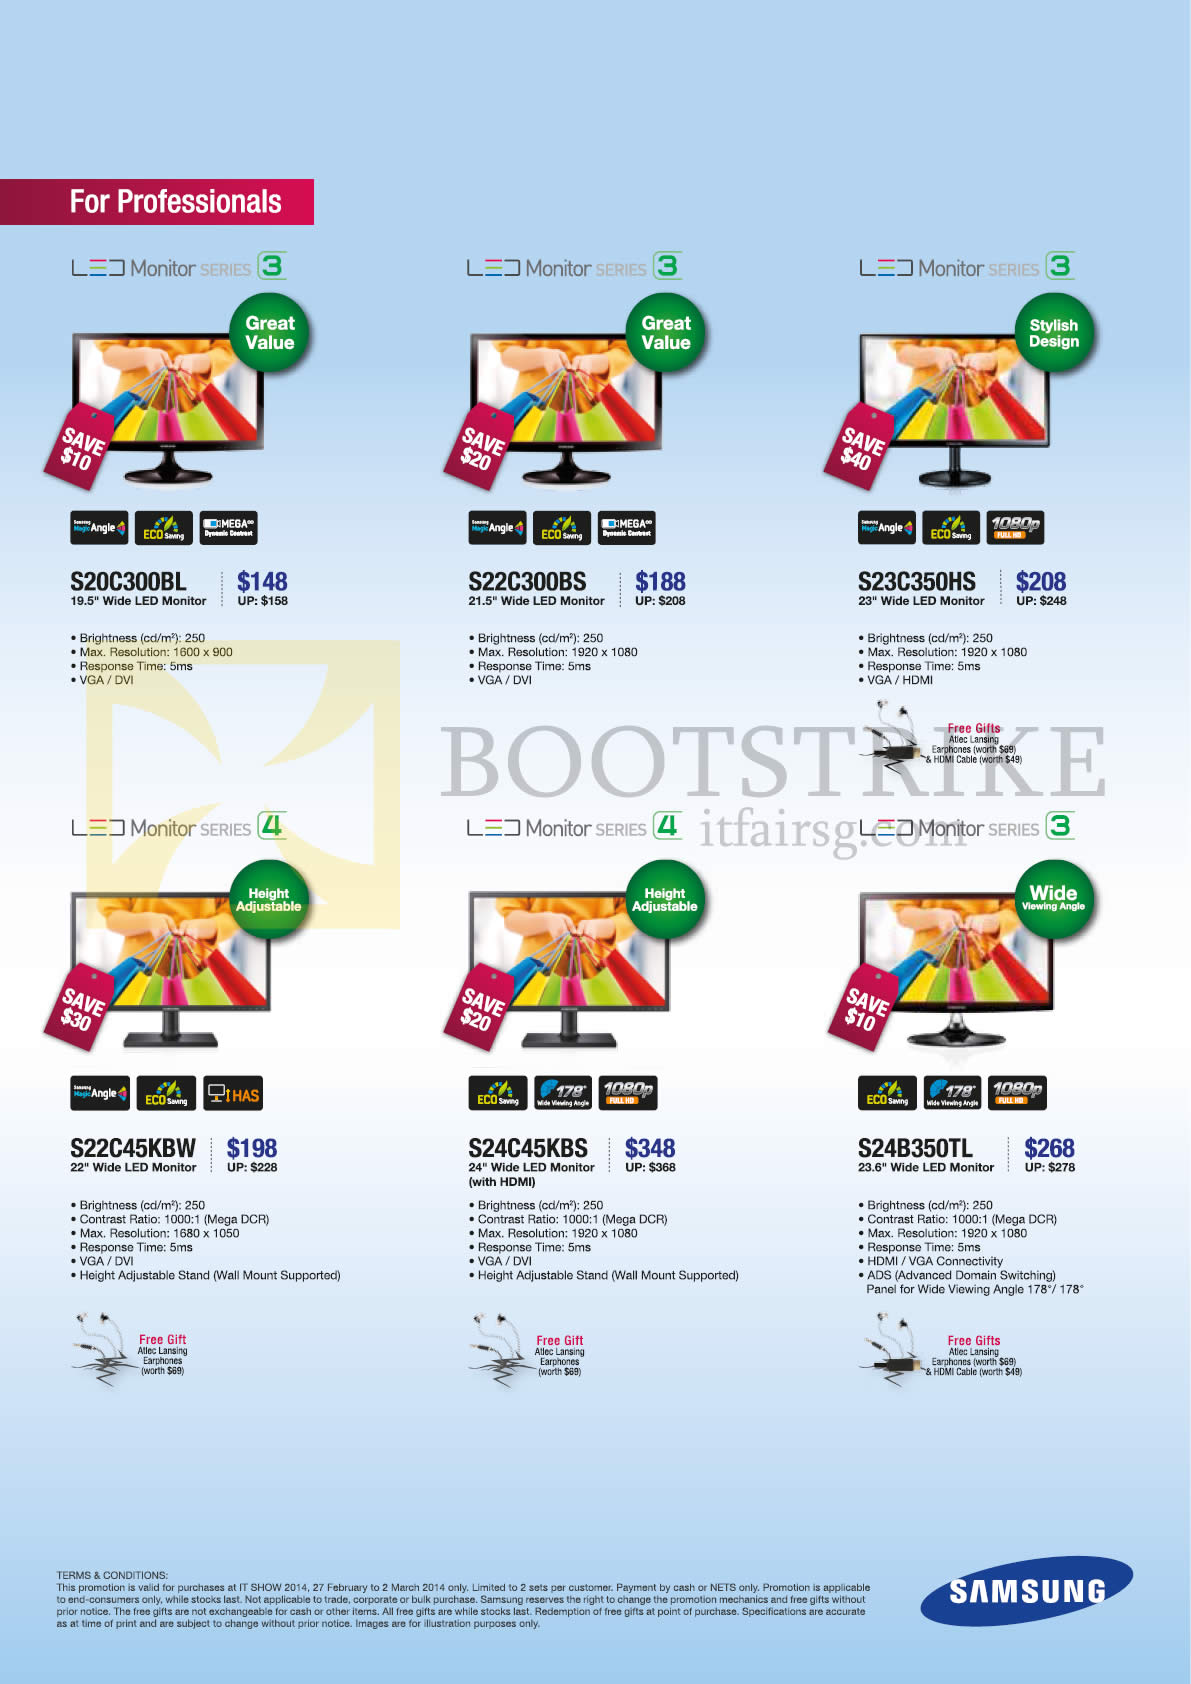 IT SHOW 2014 price list image brochure of Samsung Monitors LED S20C300BL, S22C300BS, S23C350HS, S22C45KBW, S24C45KBS, S24B350TL